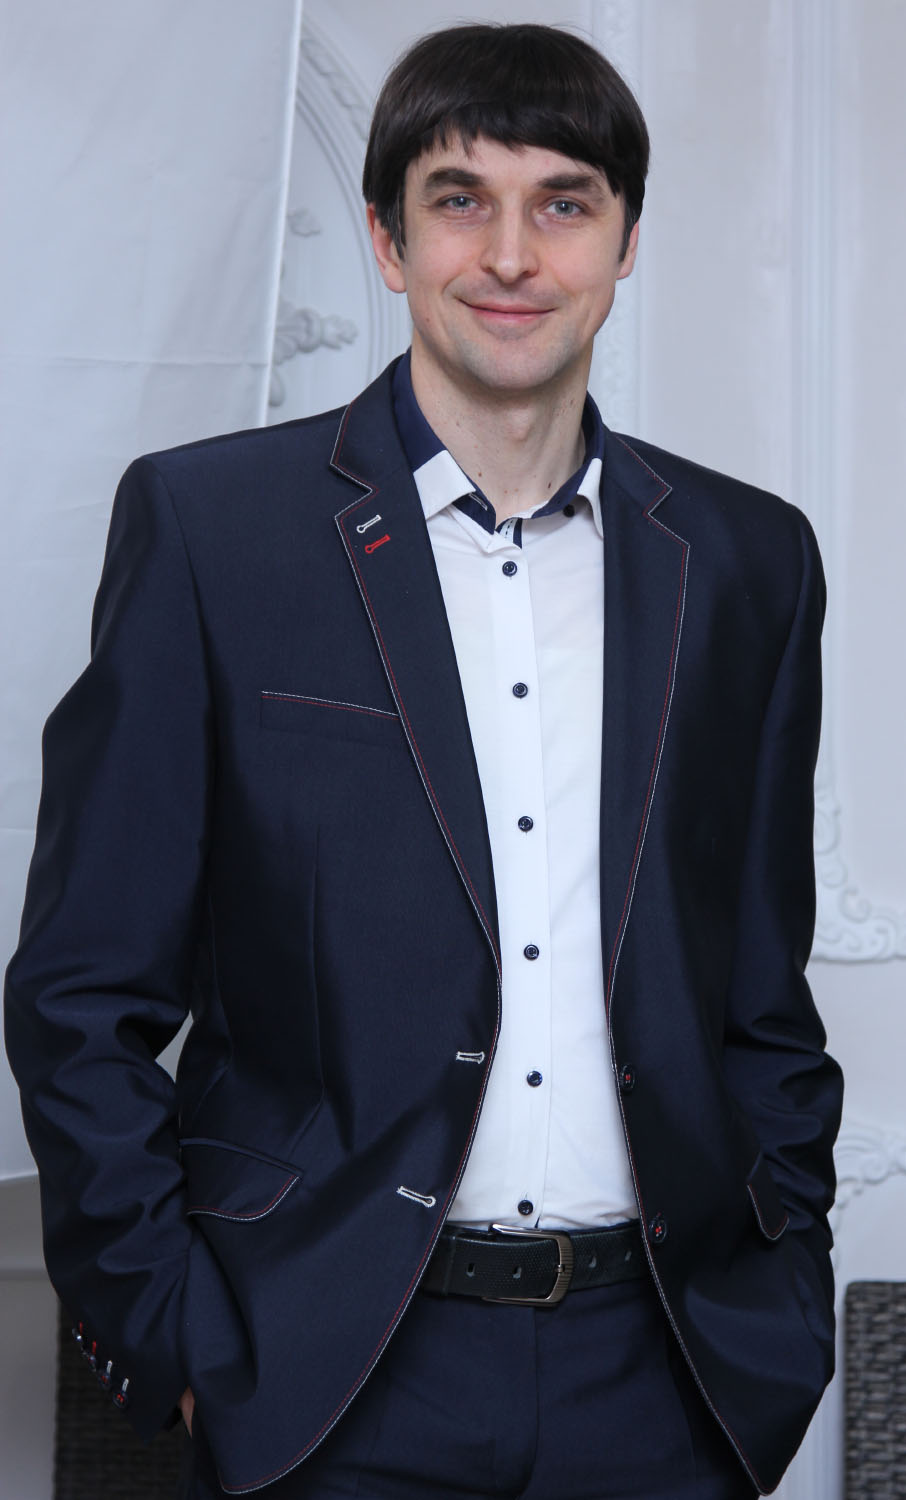 Сергей Шевченко - бизнес тренер, коуч